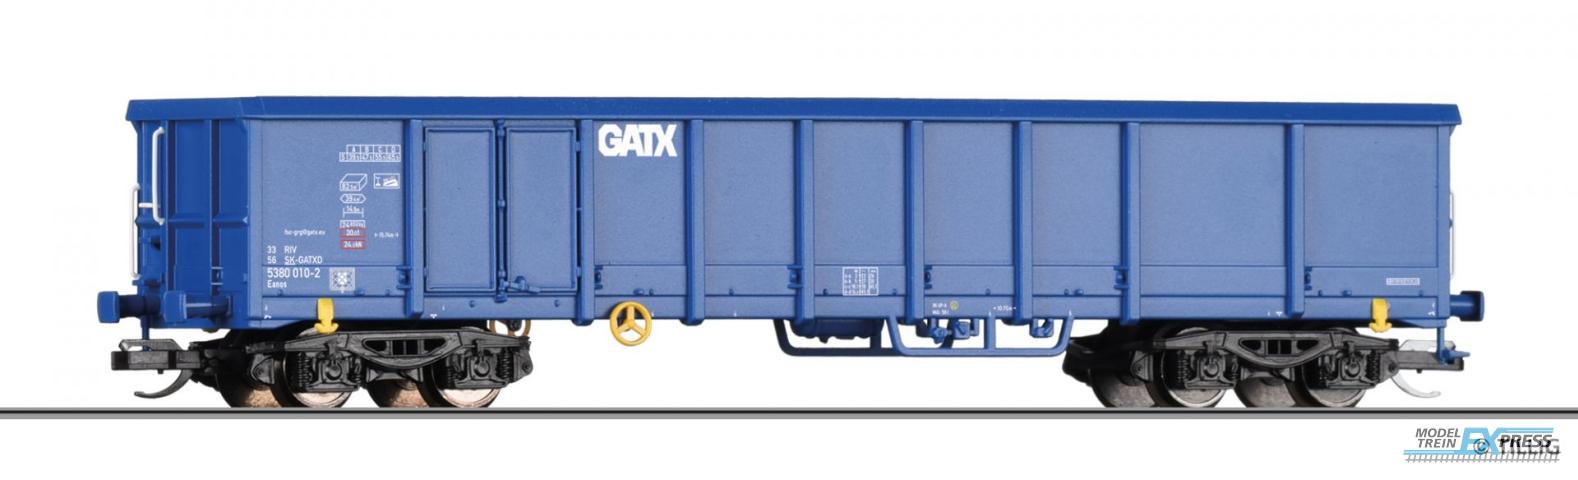 Tillig 15725 Offener Güterwagen Eaons der GATX